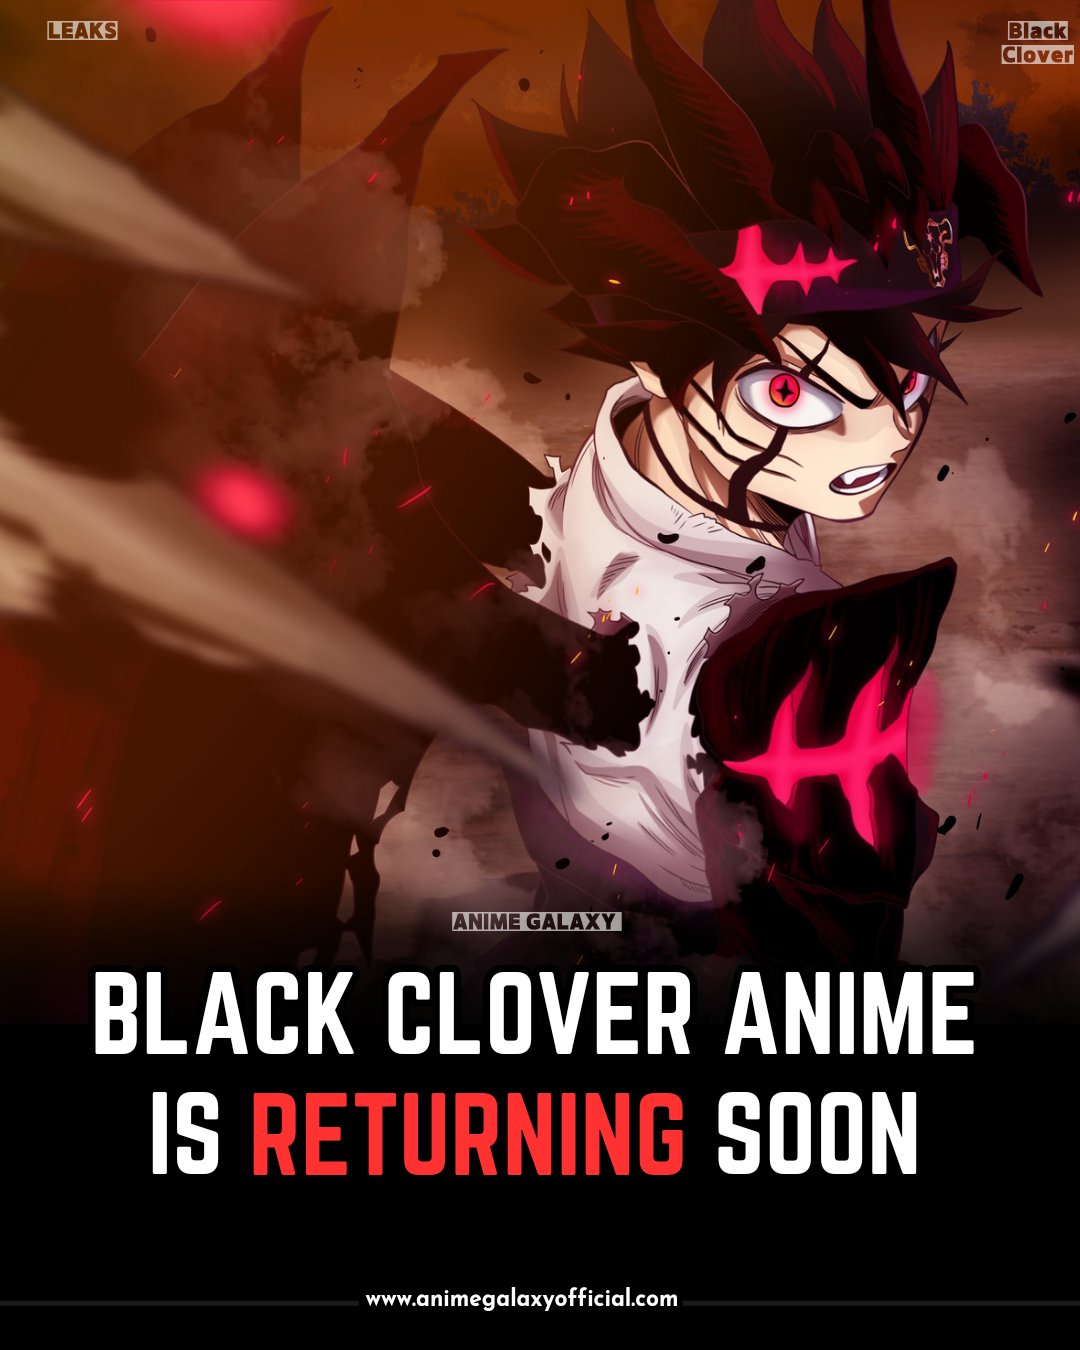 Haikyuu Final Movie Officially Announced! - Anime Galaxy